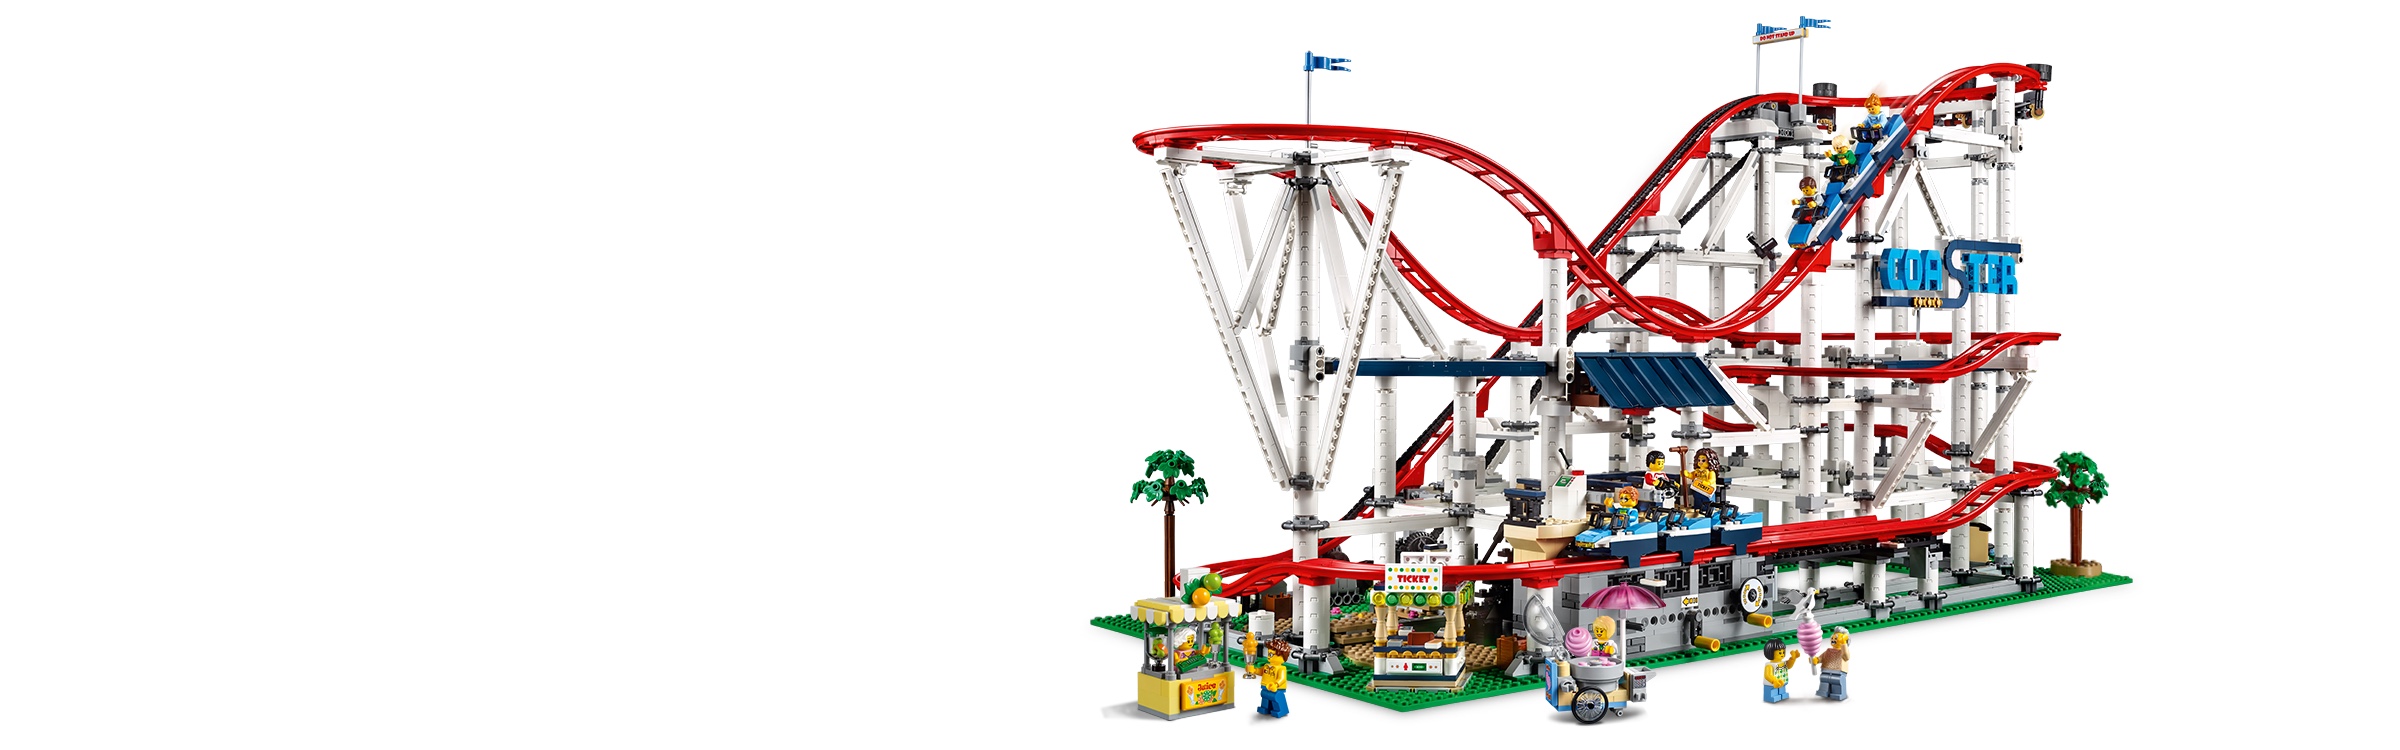 lego creator expert roller coaster 10261 building kit